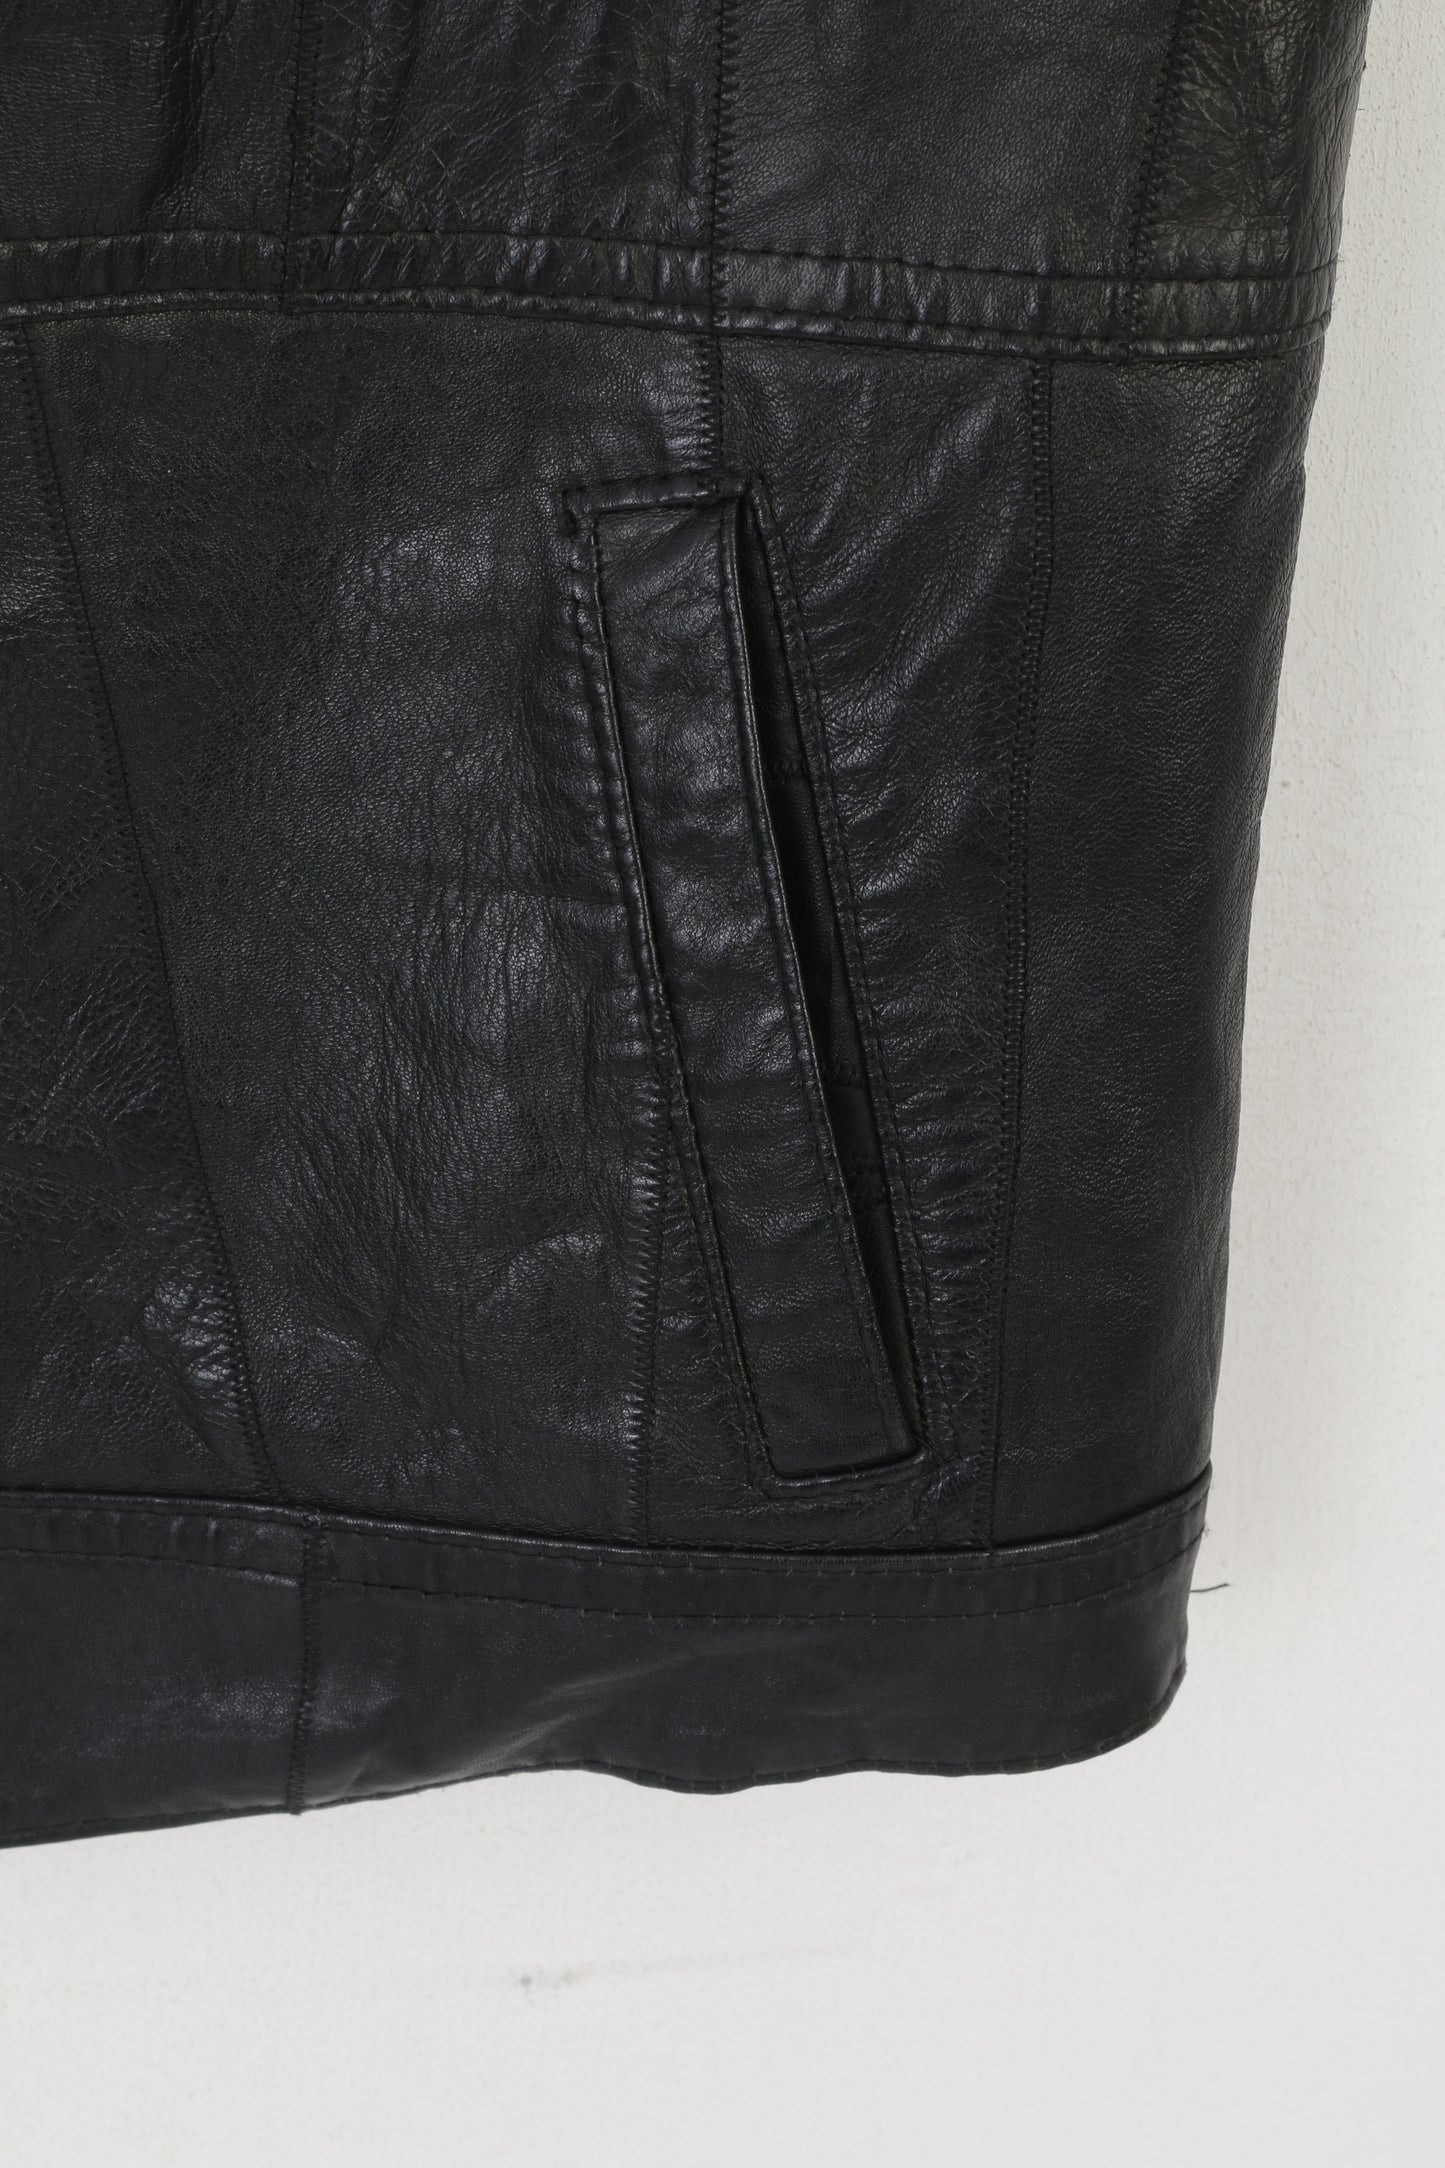 Vintage Men L Waistcoat Black Leather Soft Shiny Zip Up Multi Pockets Vest